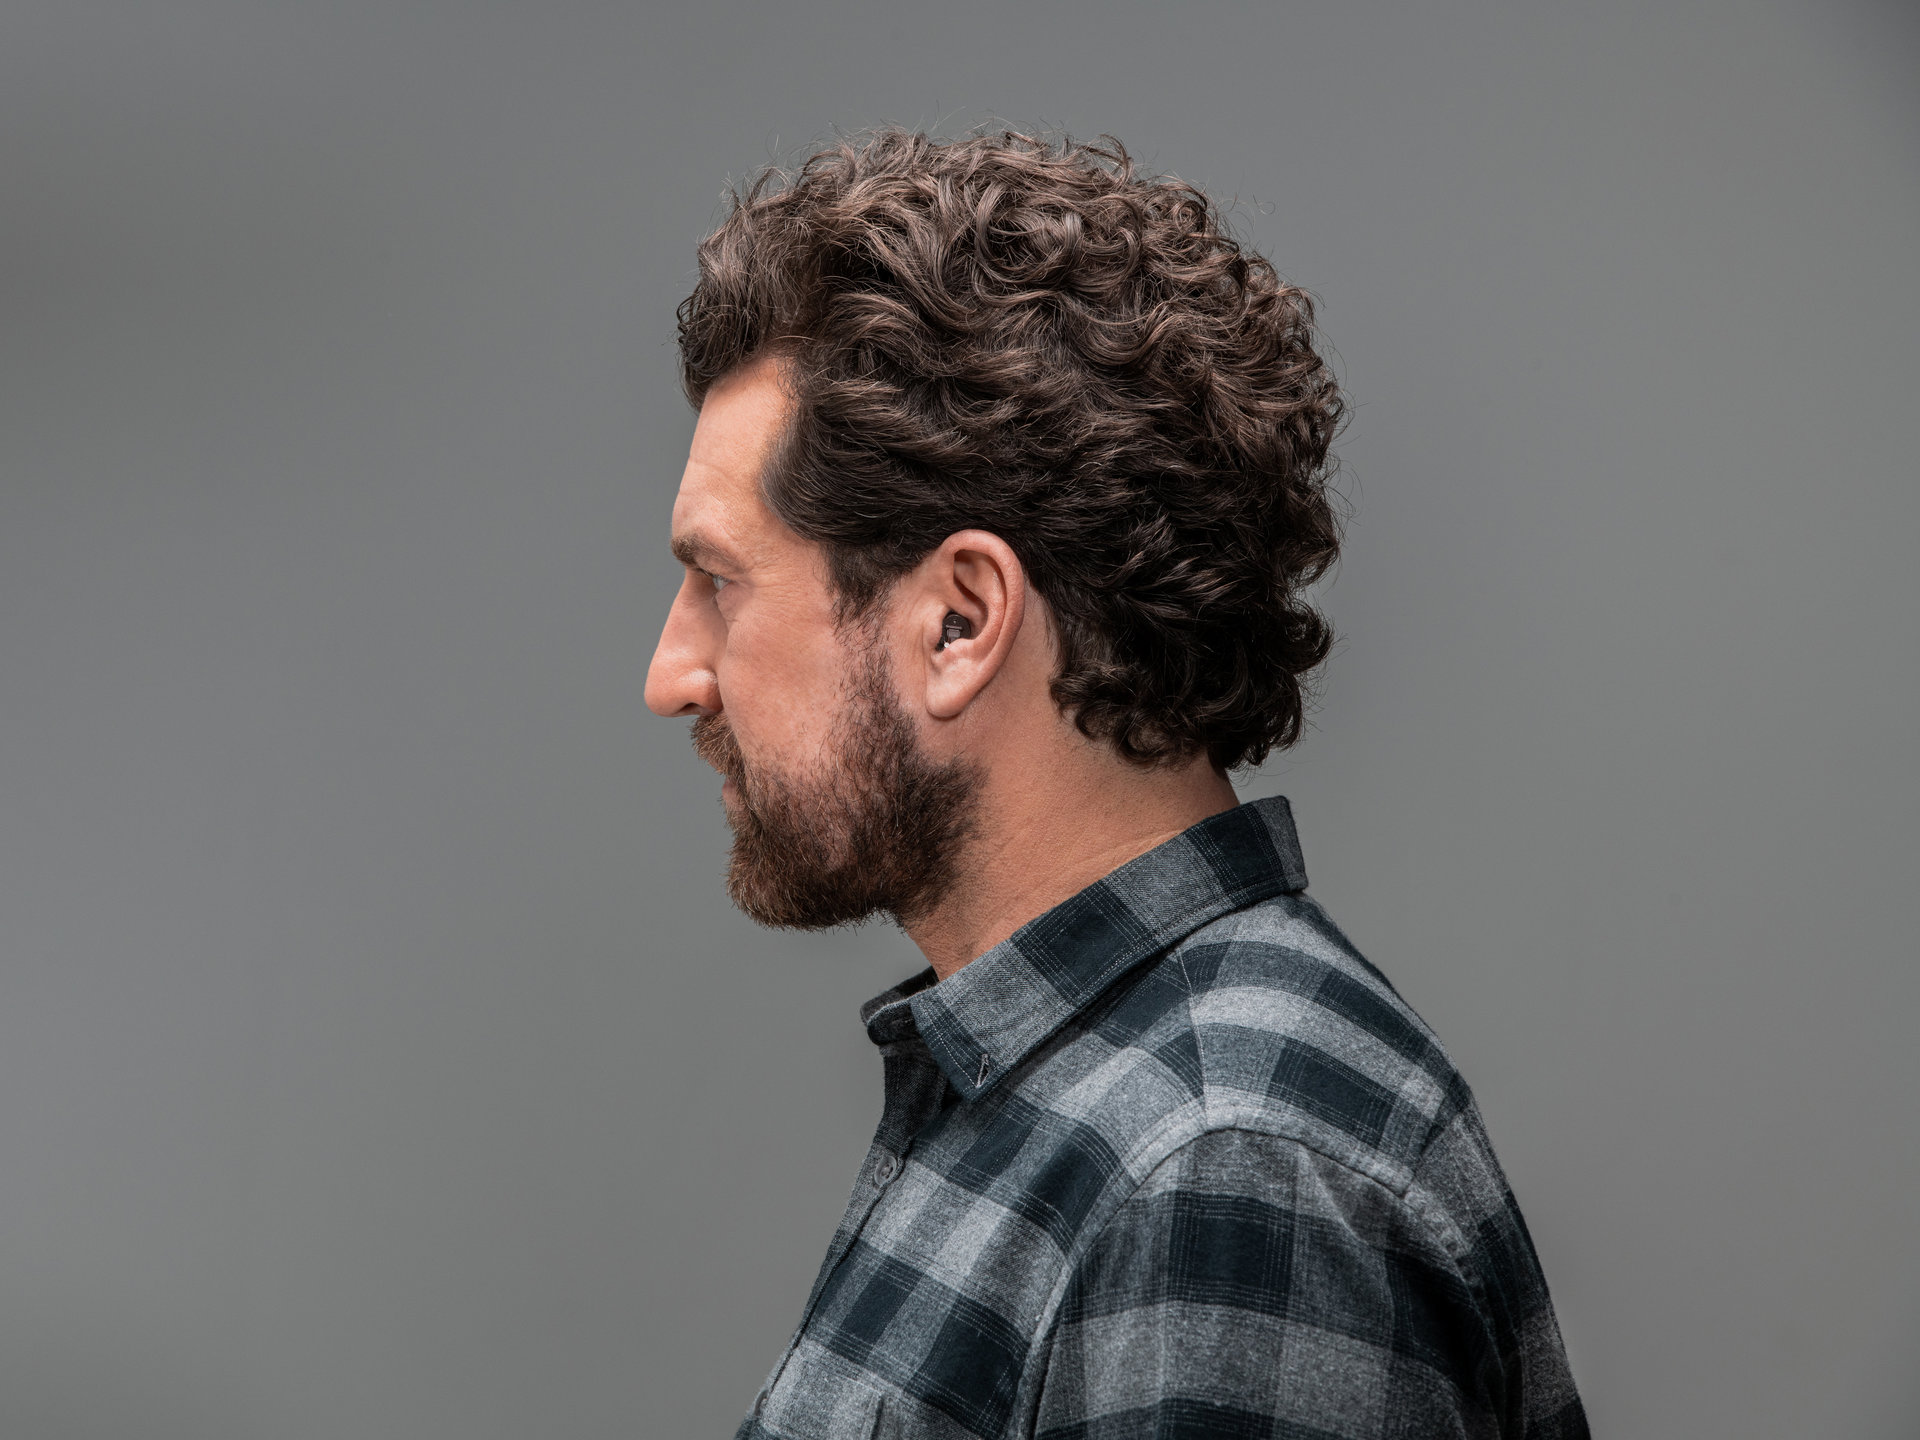 Mann mit lockigem Haar trägt ein Hörgerät im Ohr